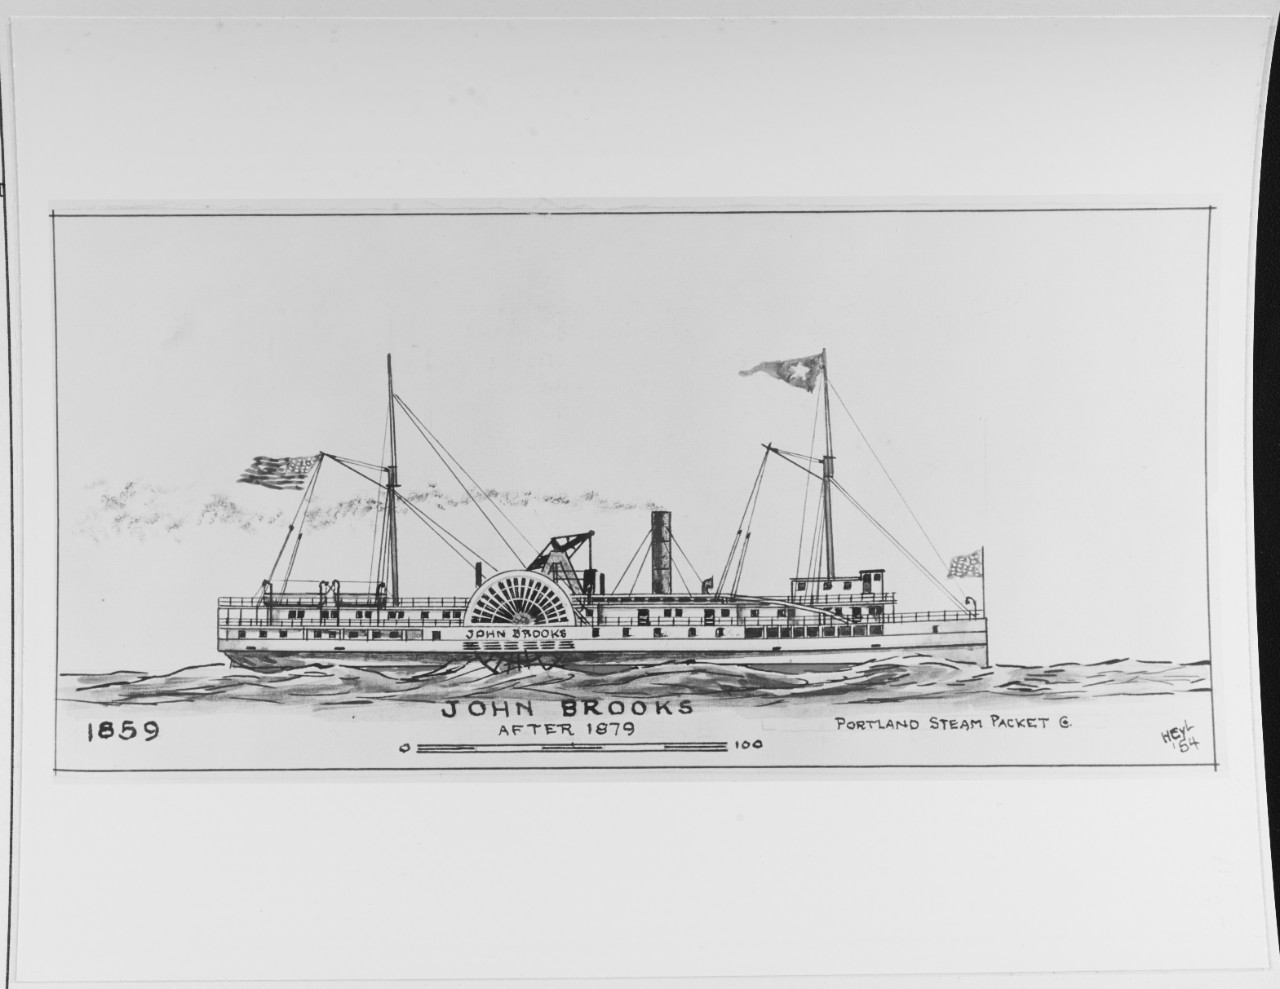 JOHN BROOKS (American merchant steamer, 1859-1902)